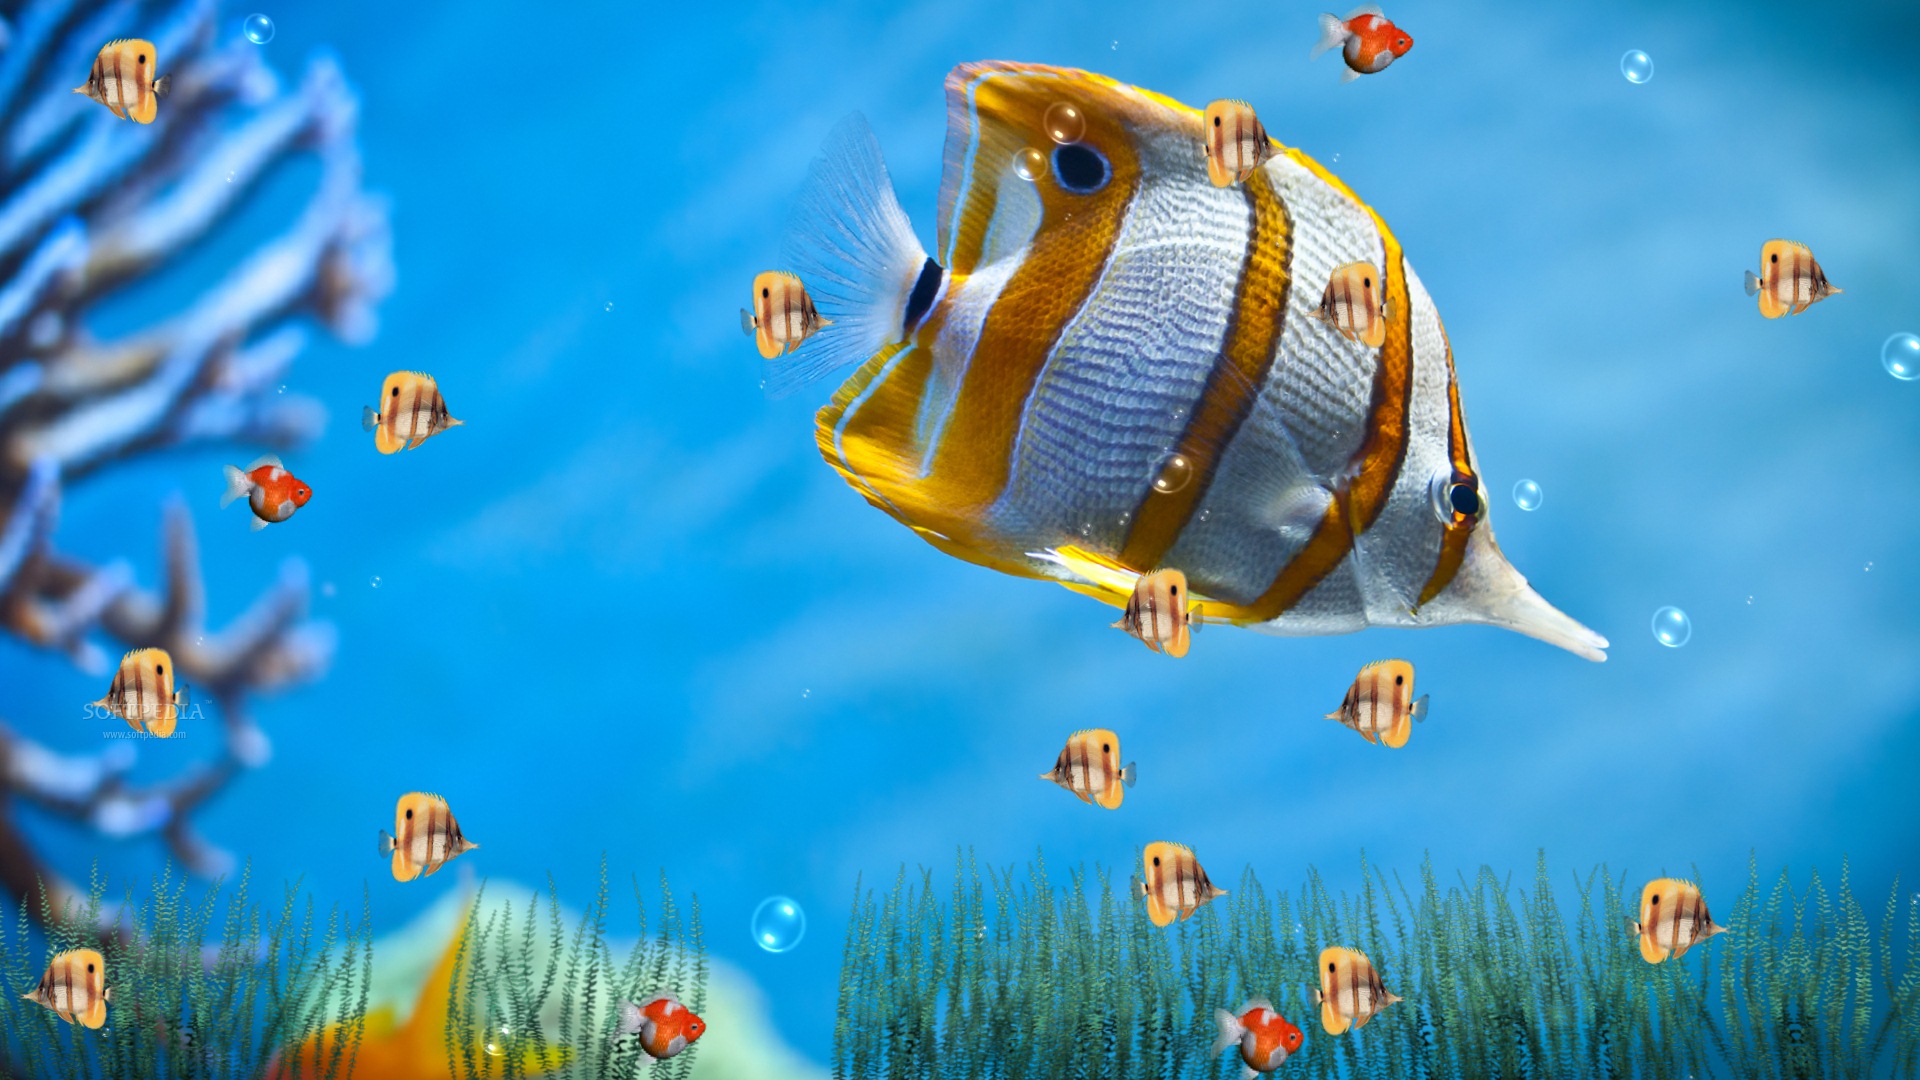 free download marine aquarium screensaver full version